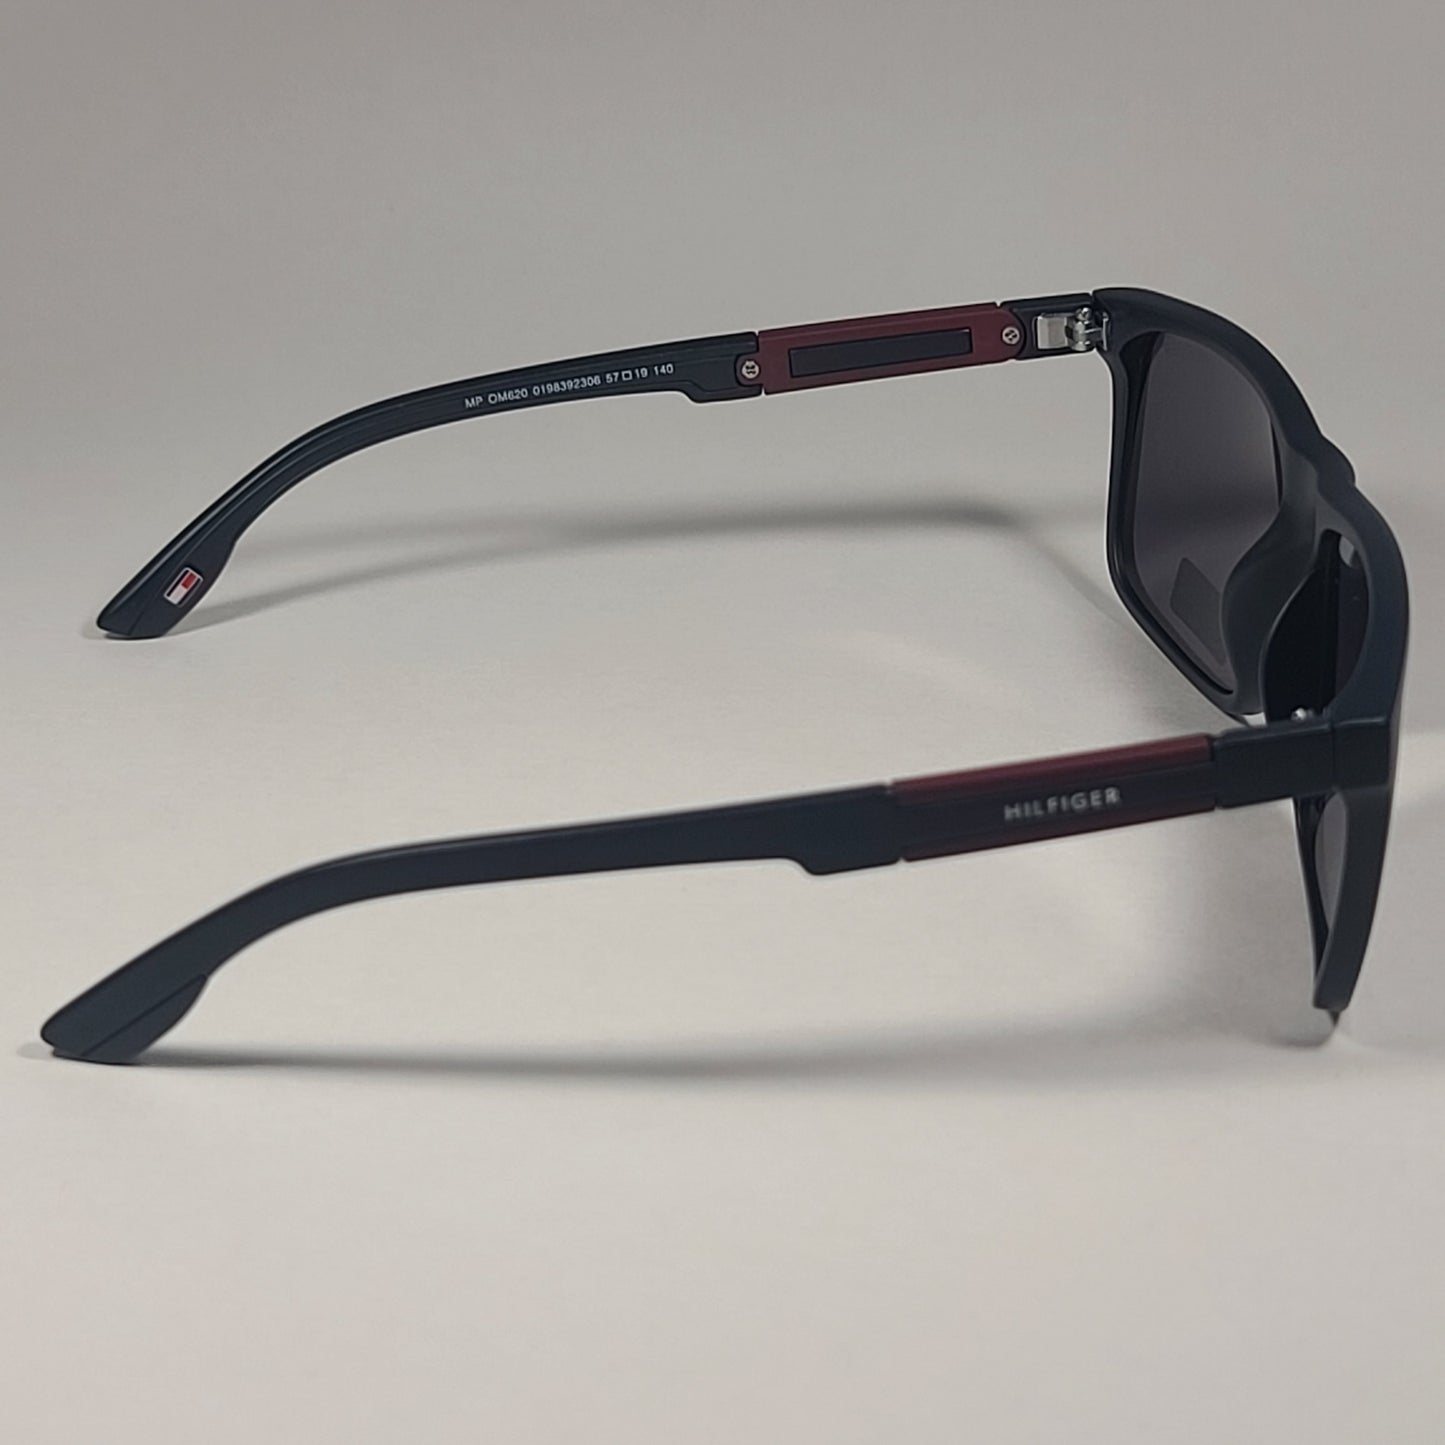 Tommy Hilfiger MP OM620 Rectangular Sunglasses Matte Black Burgundy Frame / Gray Lens - Sunglasses